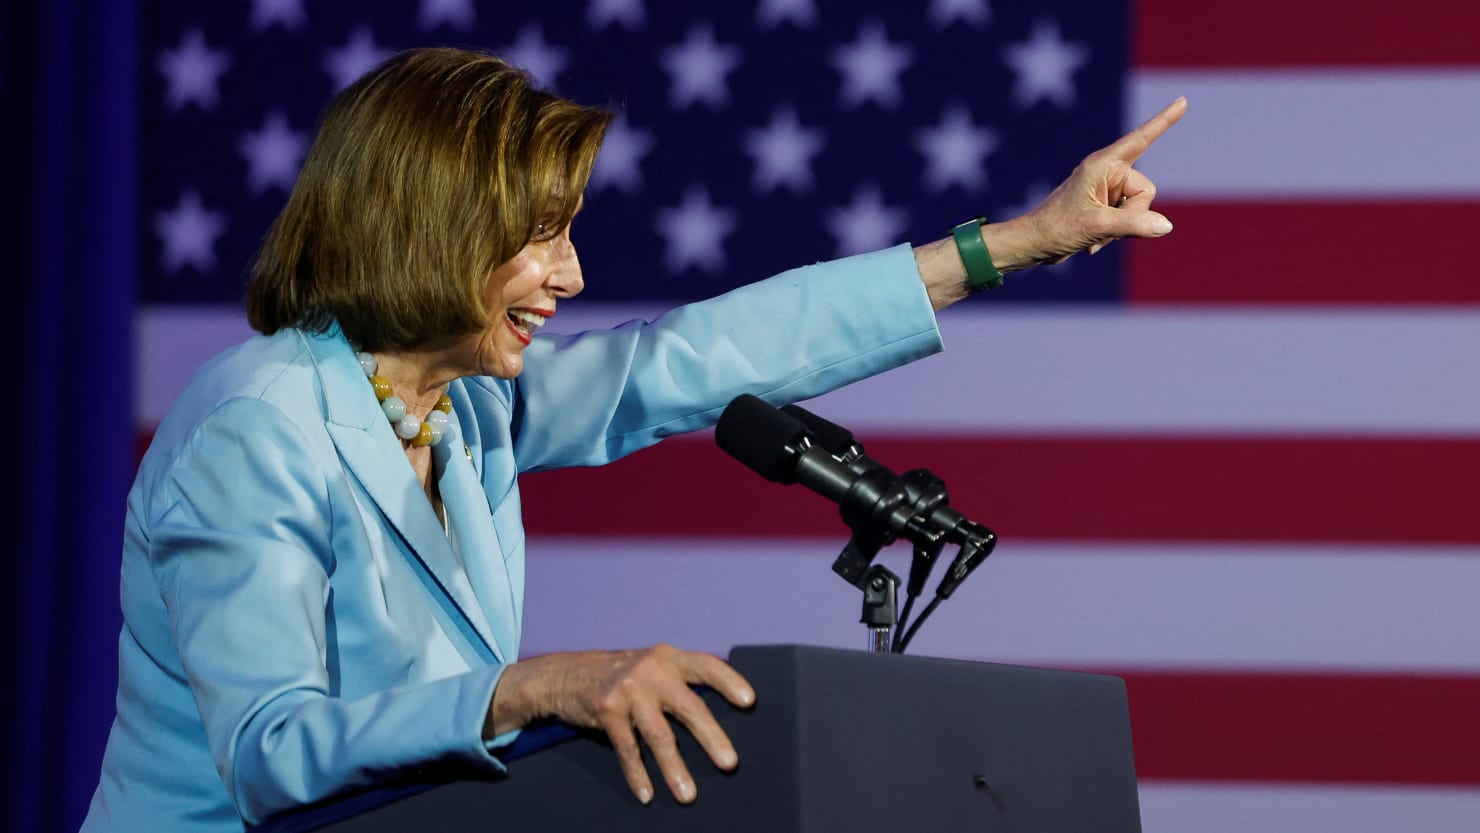 Nancy Pelosi re-elected Speaker of the House